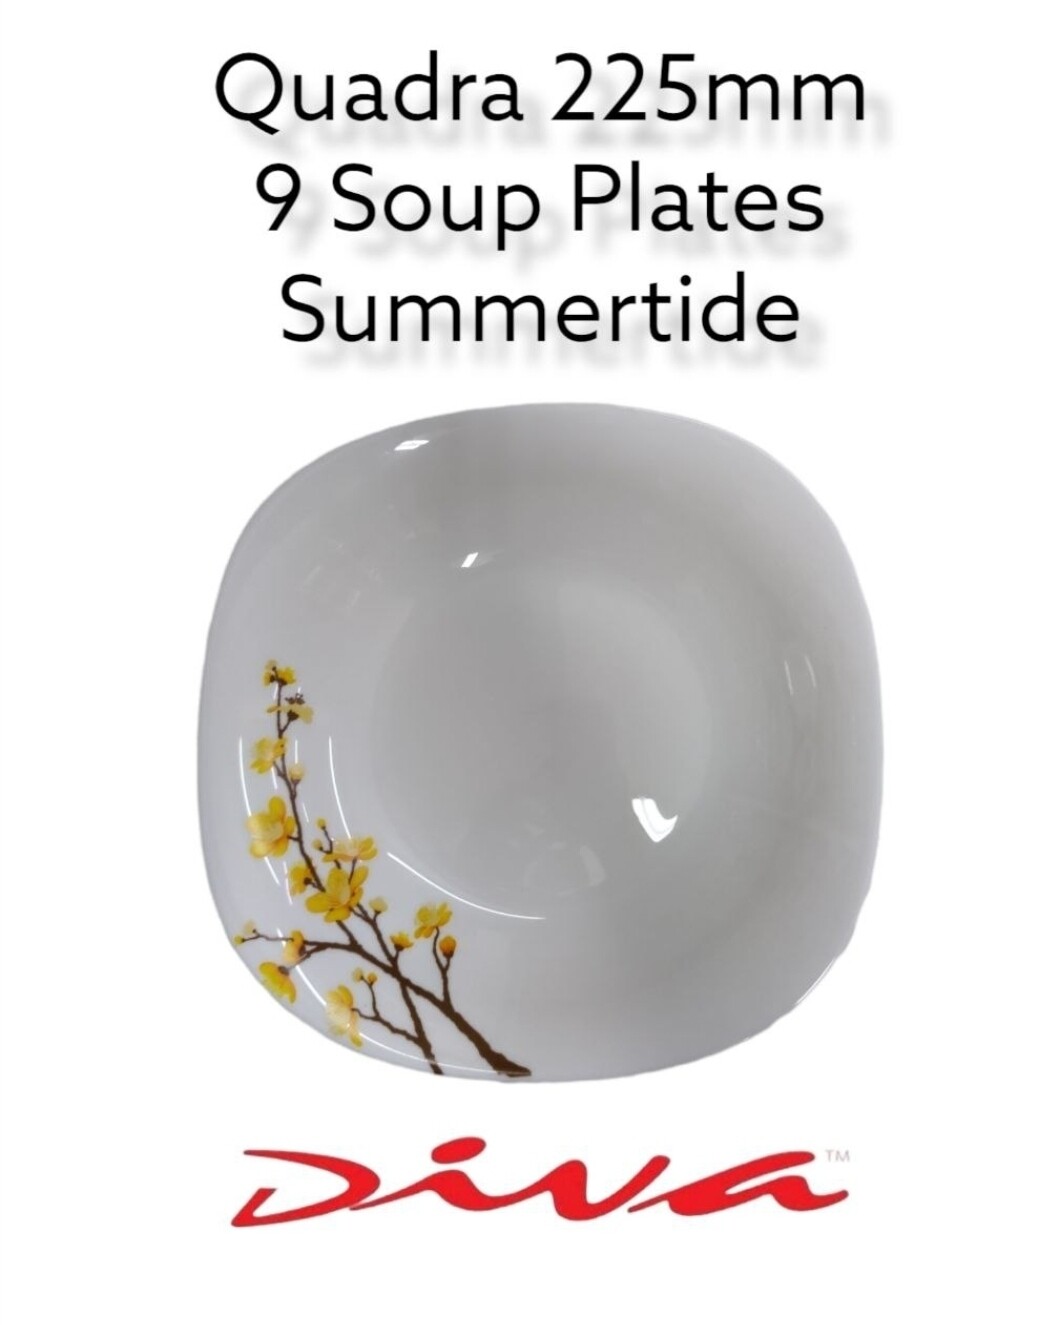 Diva 9 Quadra Square Soup Plates Summertide